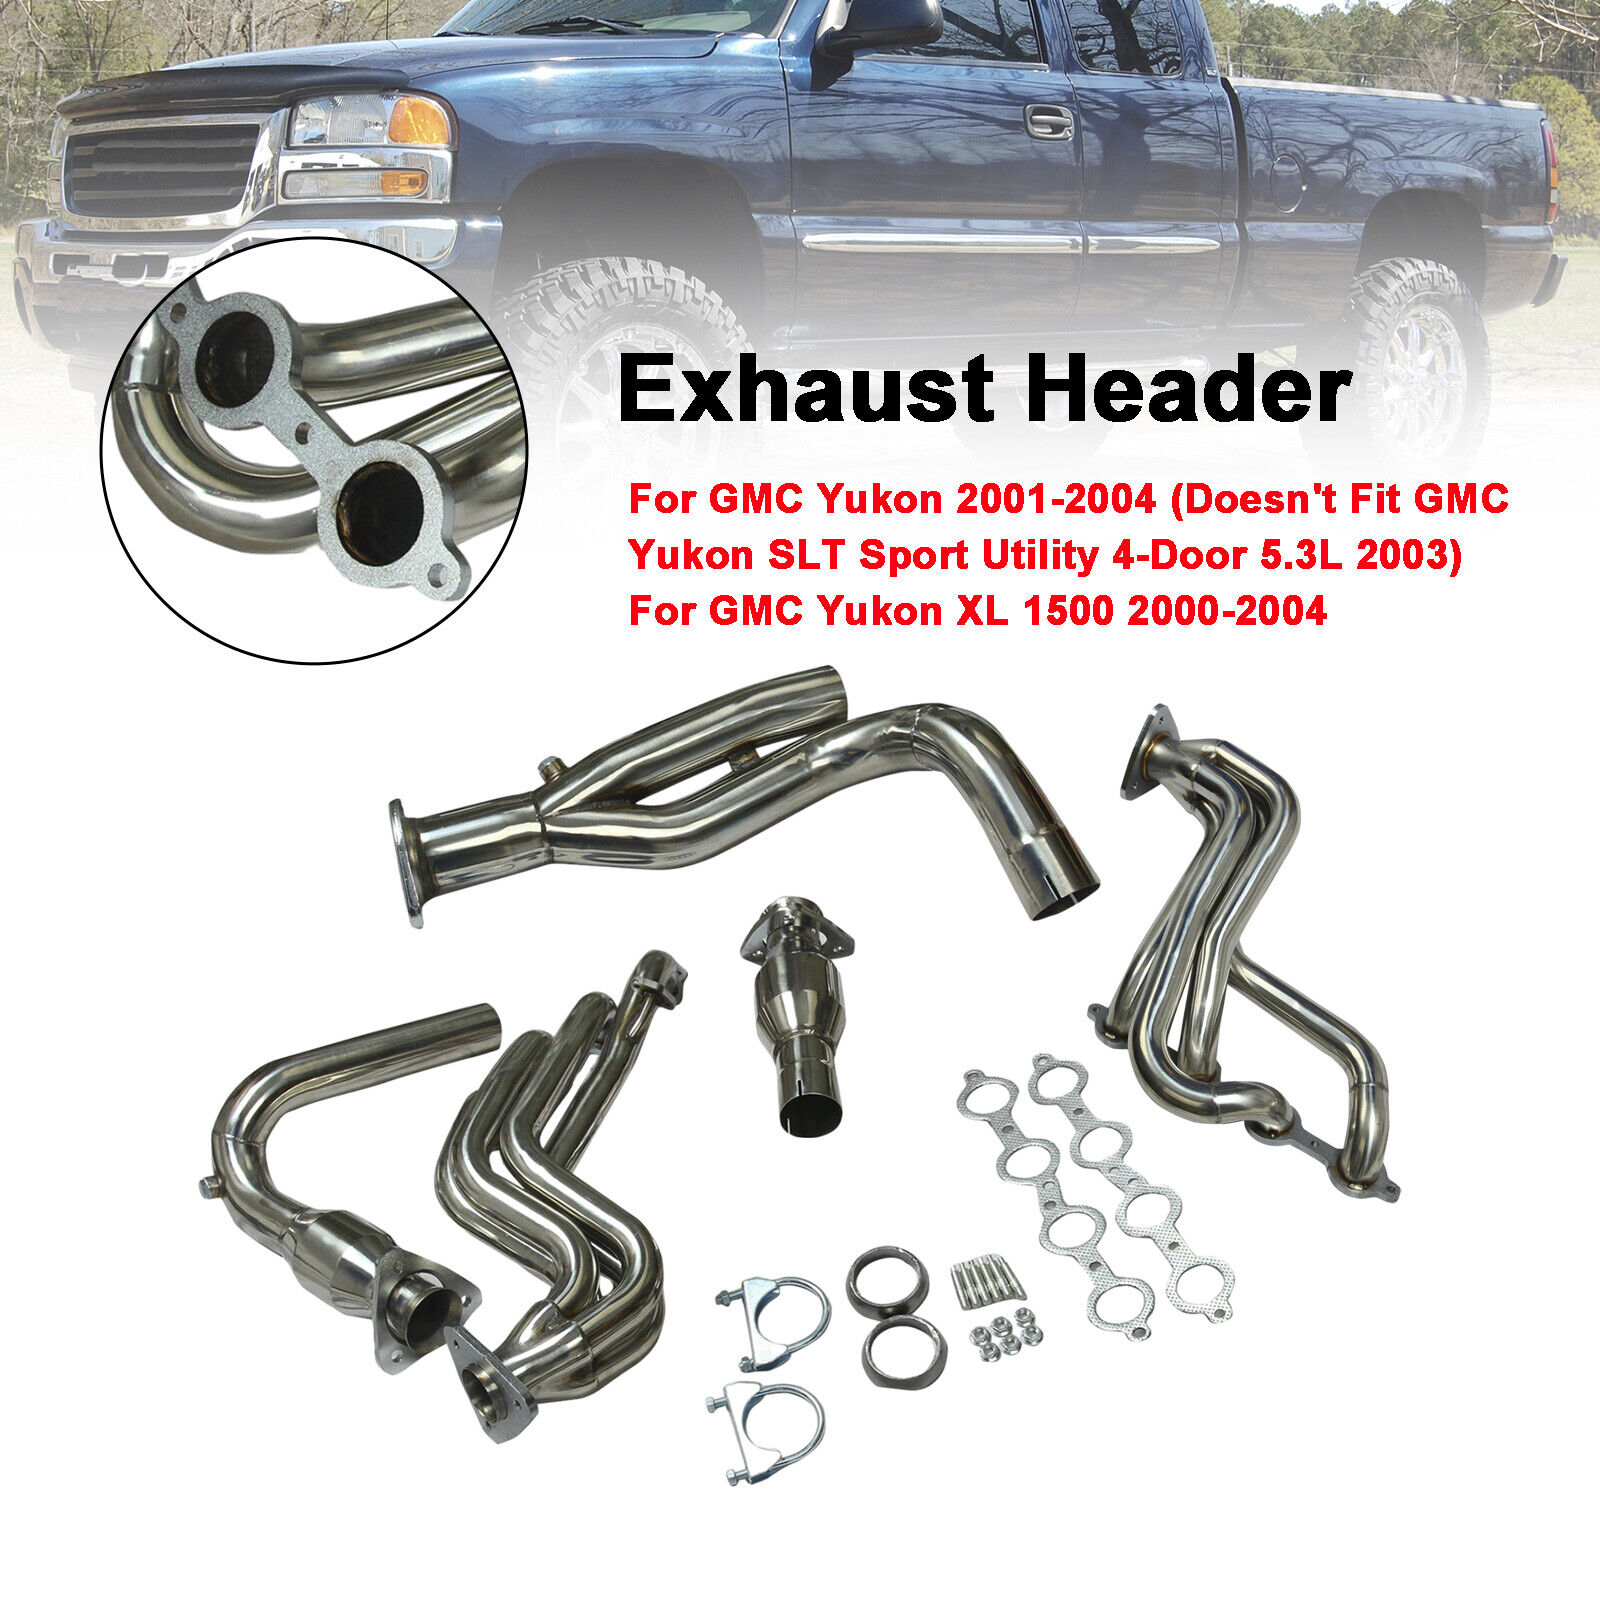 NEW 1× Exhaust Header Kit For GMC Yukon XL 1500 & Chevy Suburban 1500 / Tahoe US